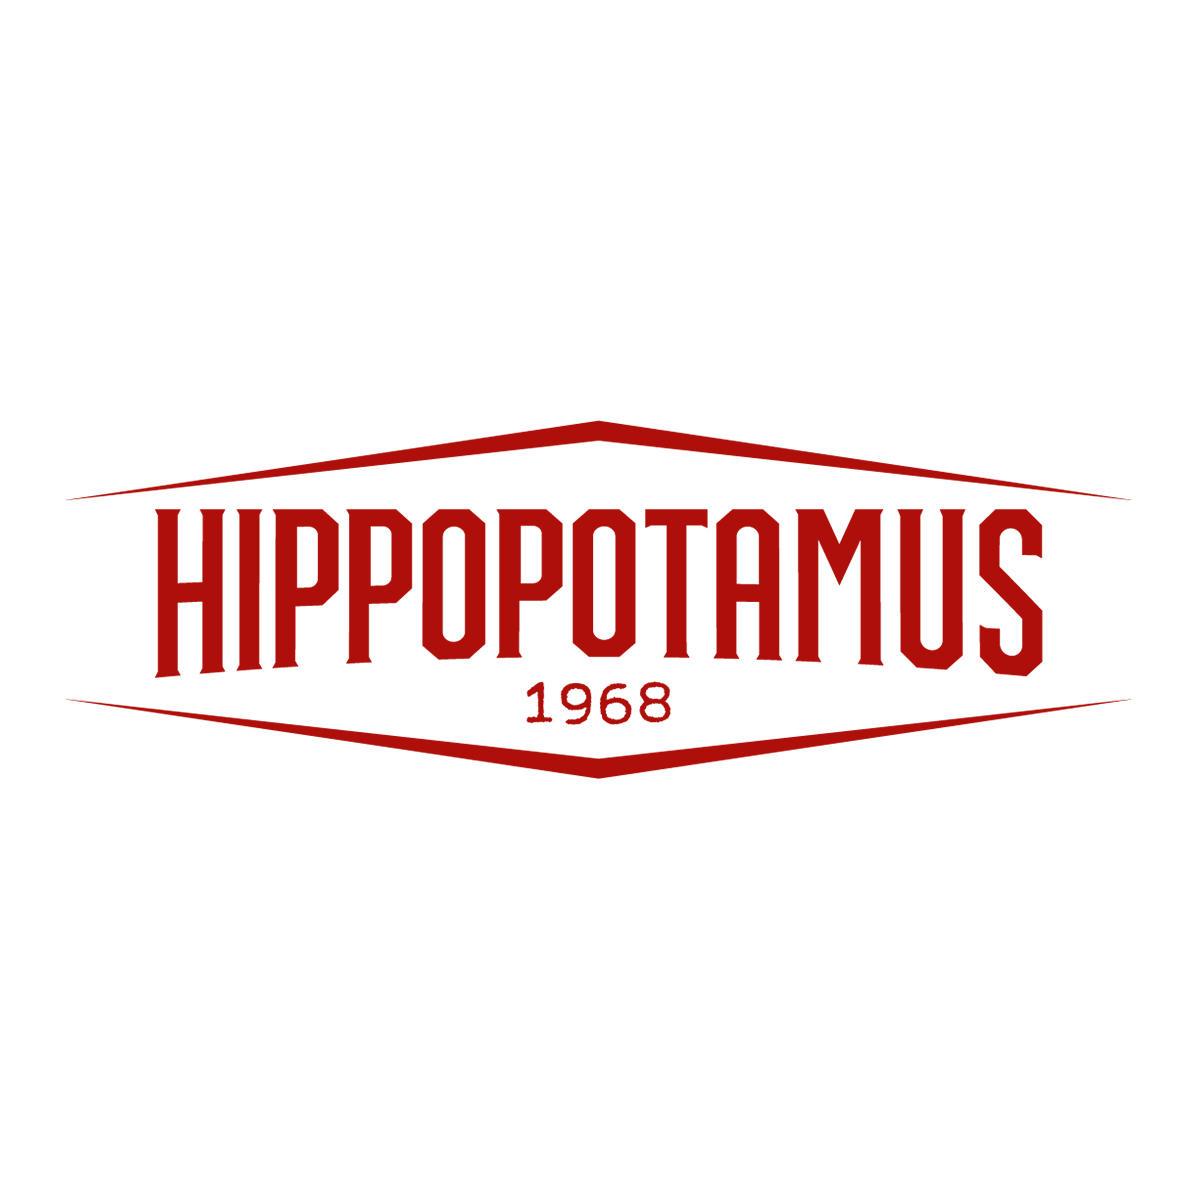 Hippopotamus Steakhouse Lyon